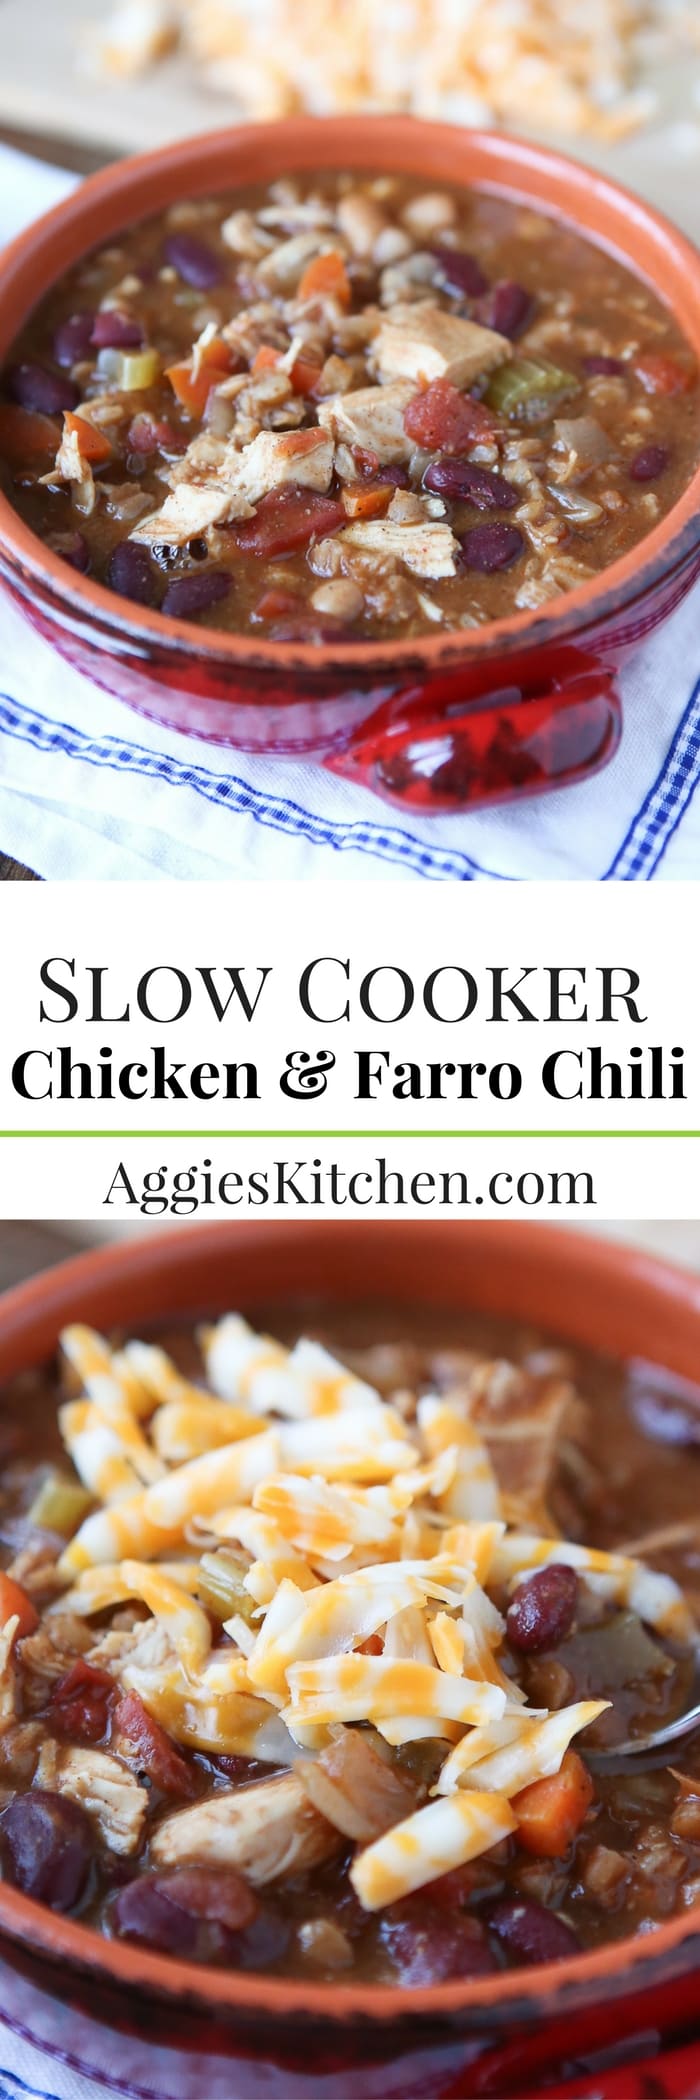 Slow Cooker Chicken and Farro Chili